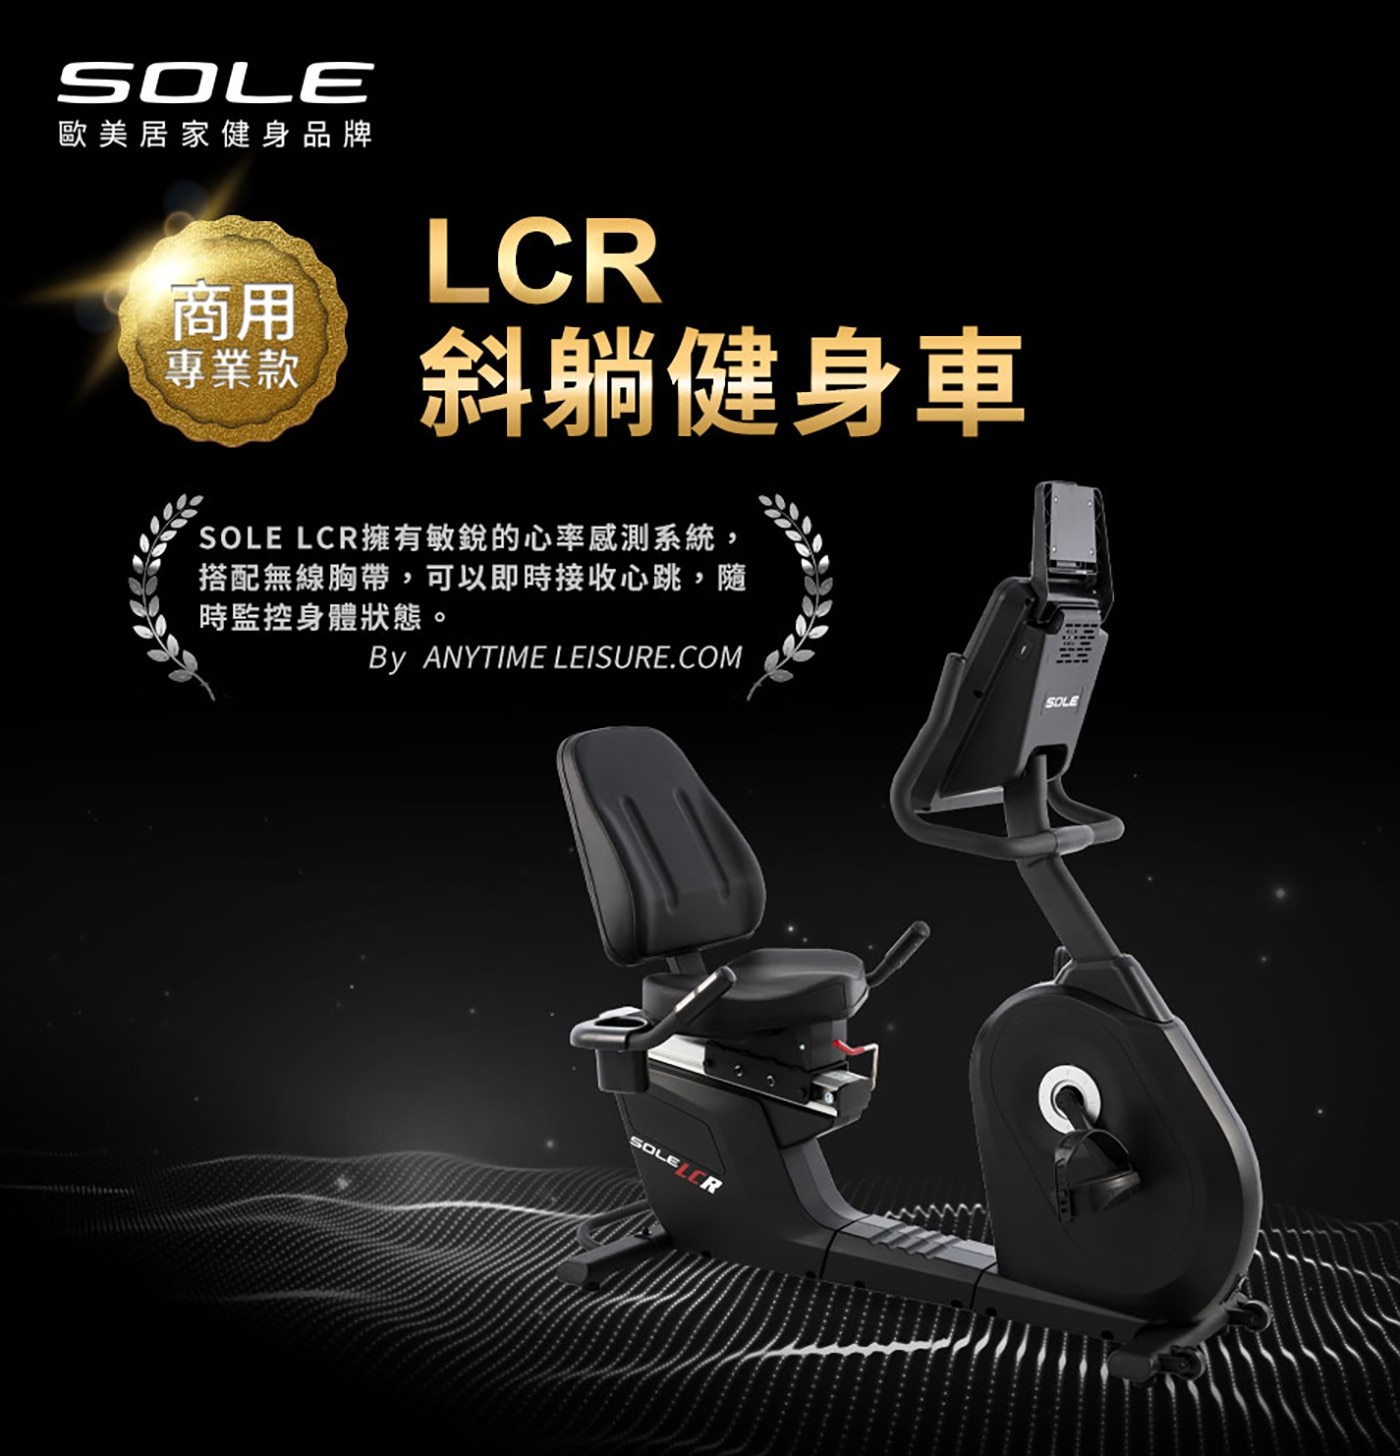 SOLE LCR 智能斜躺健身車